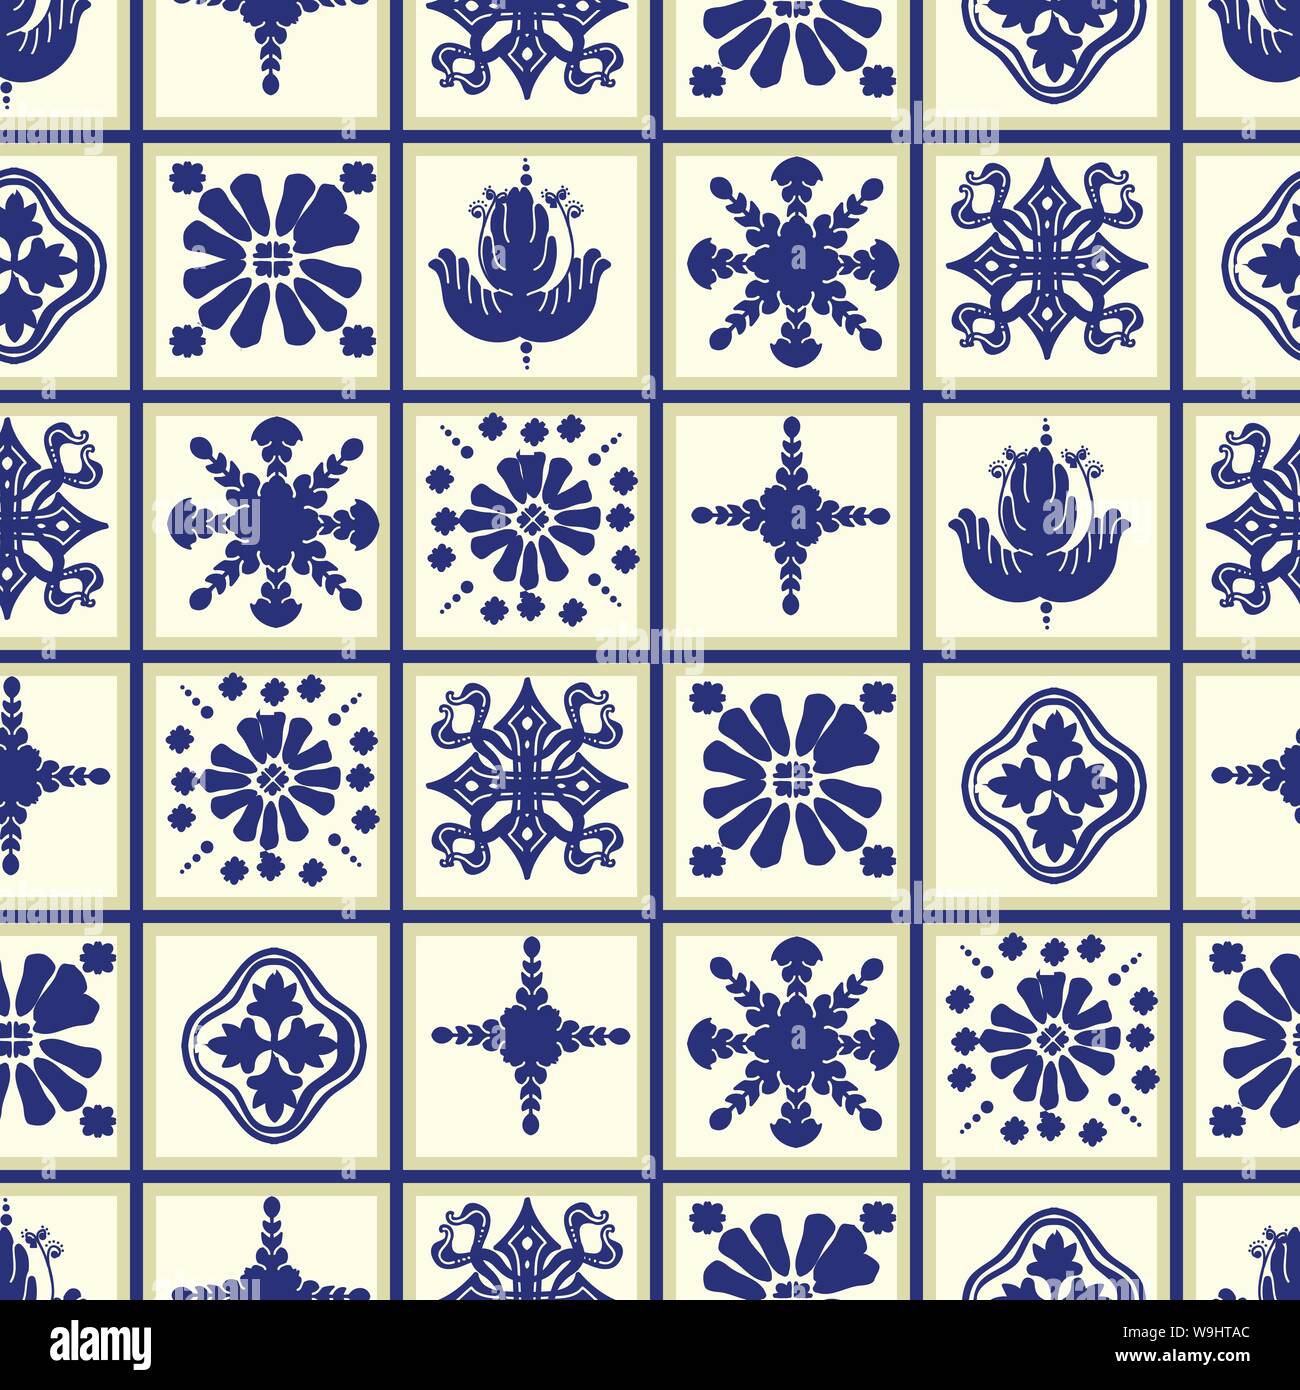 Vector Tile Pattern Lisbon Floral Mosaic Mediterranean Seamless Navy